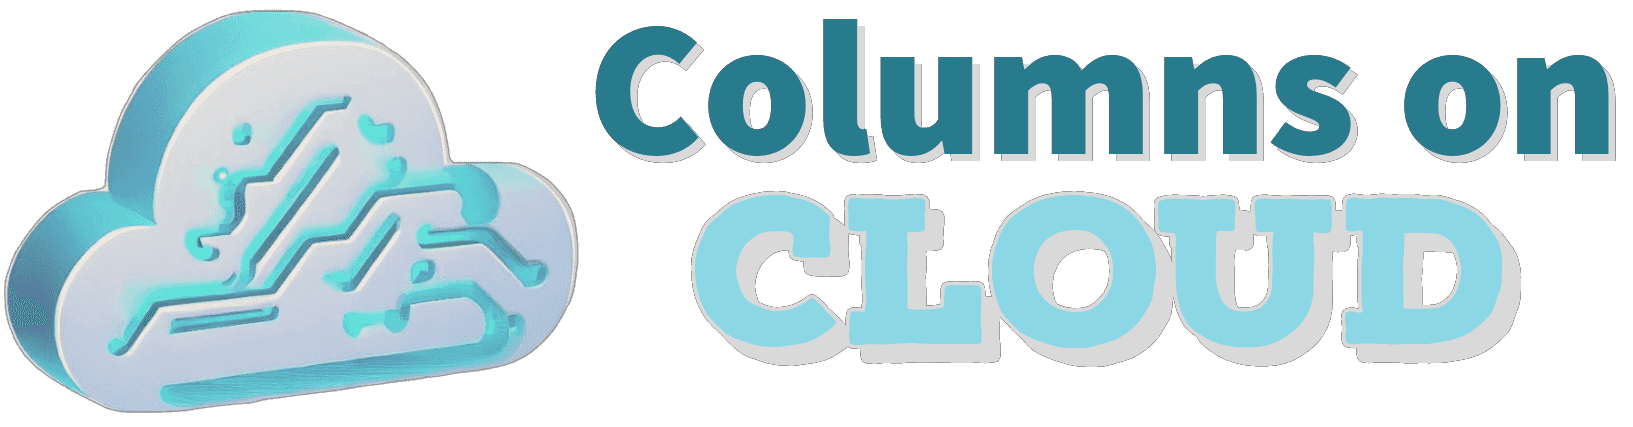 Column on Cloud logo and header